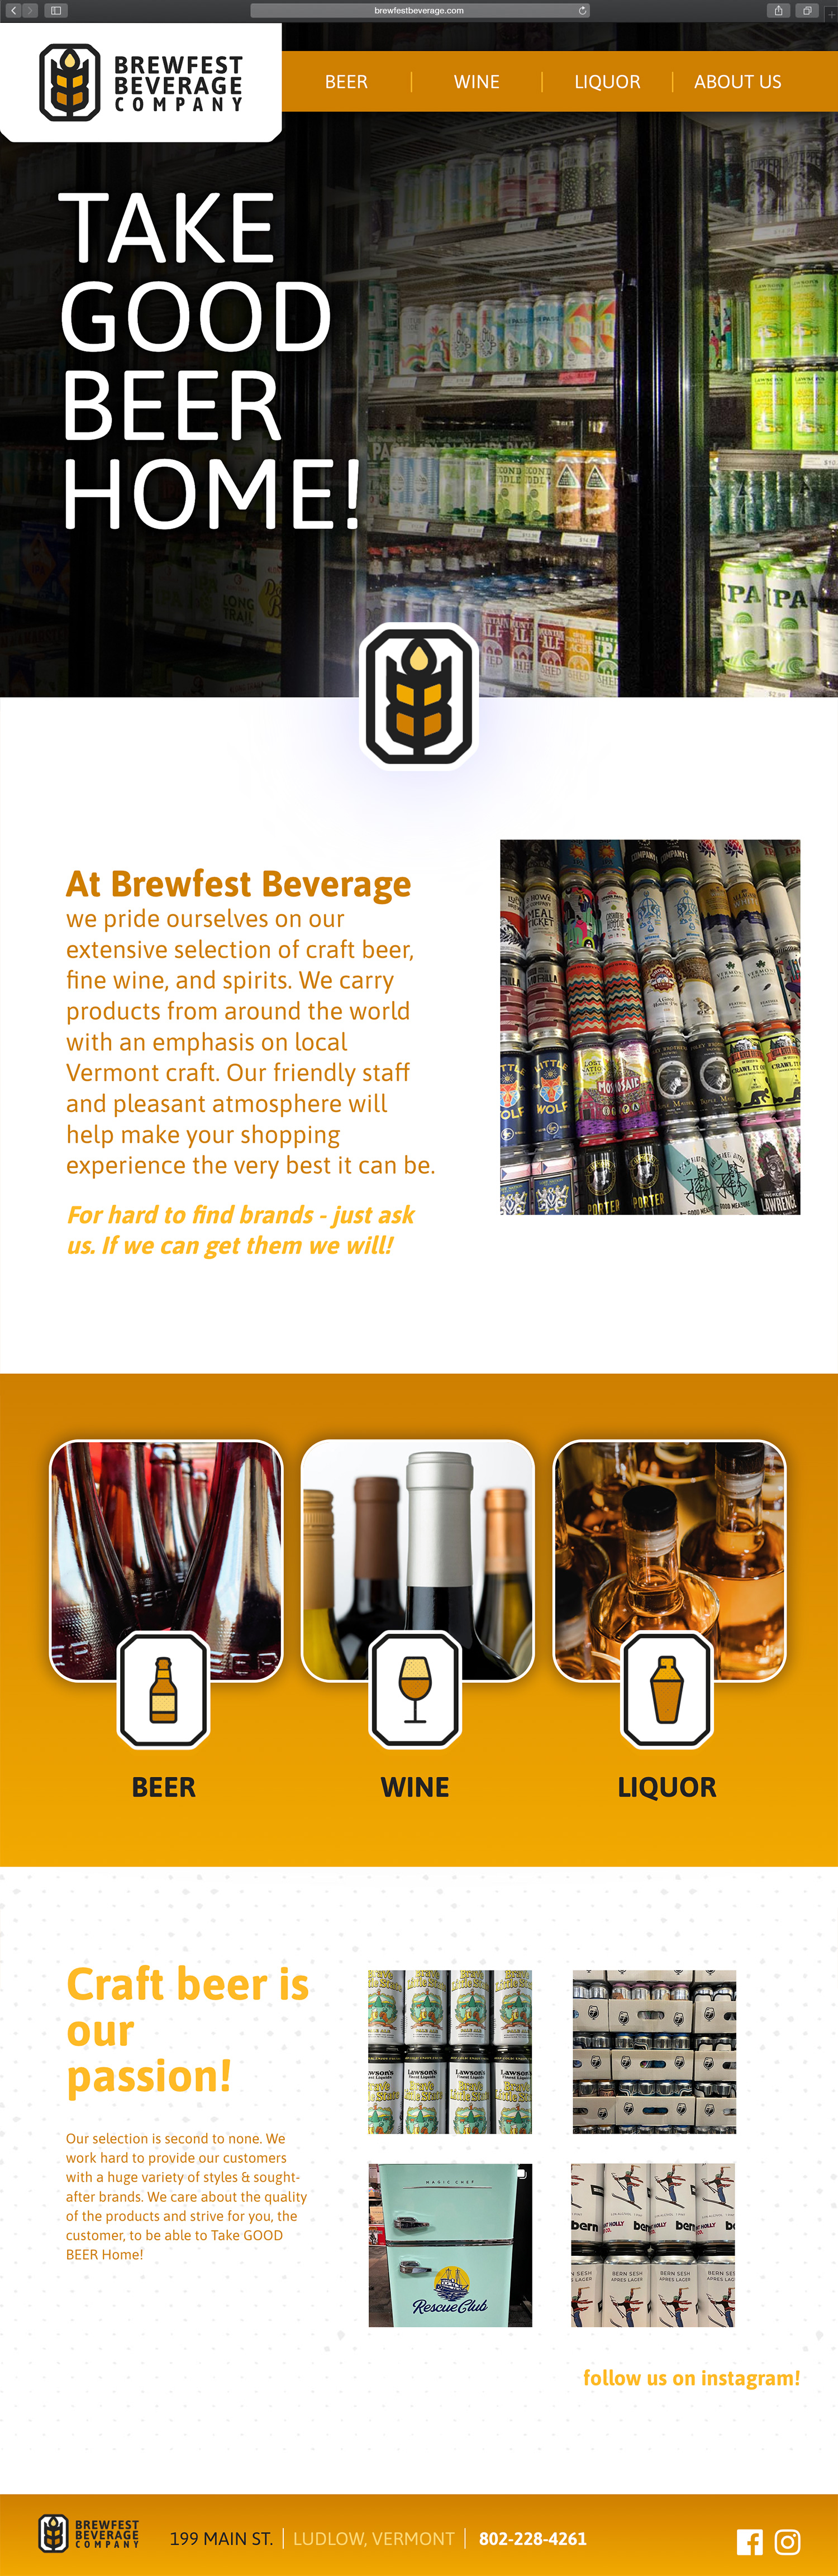 Website design and website development for Brewfest Beverage - homepage view.